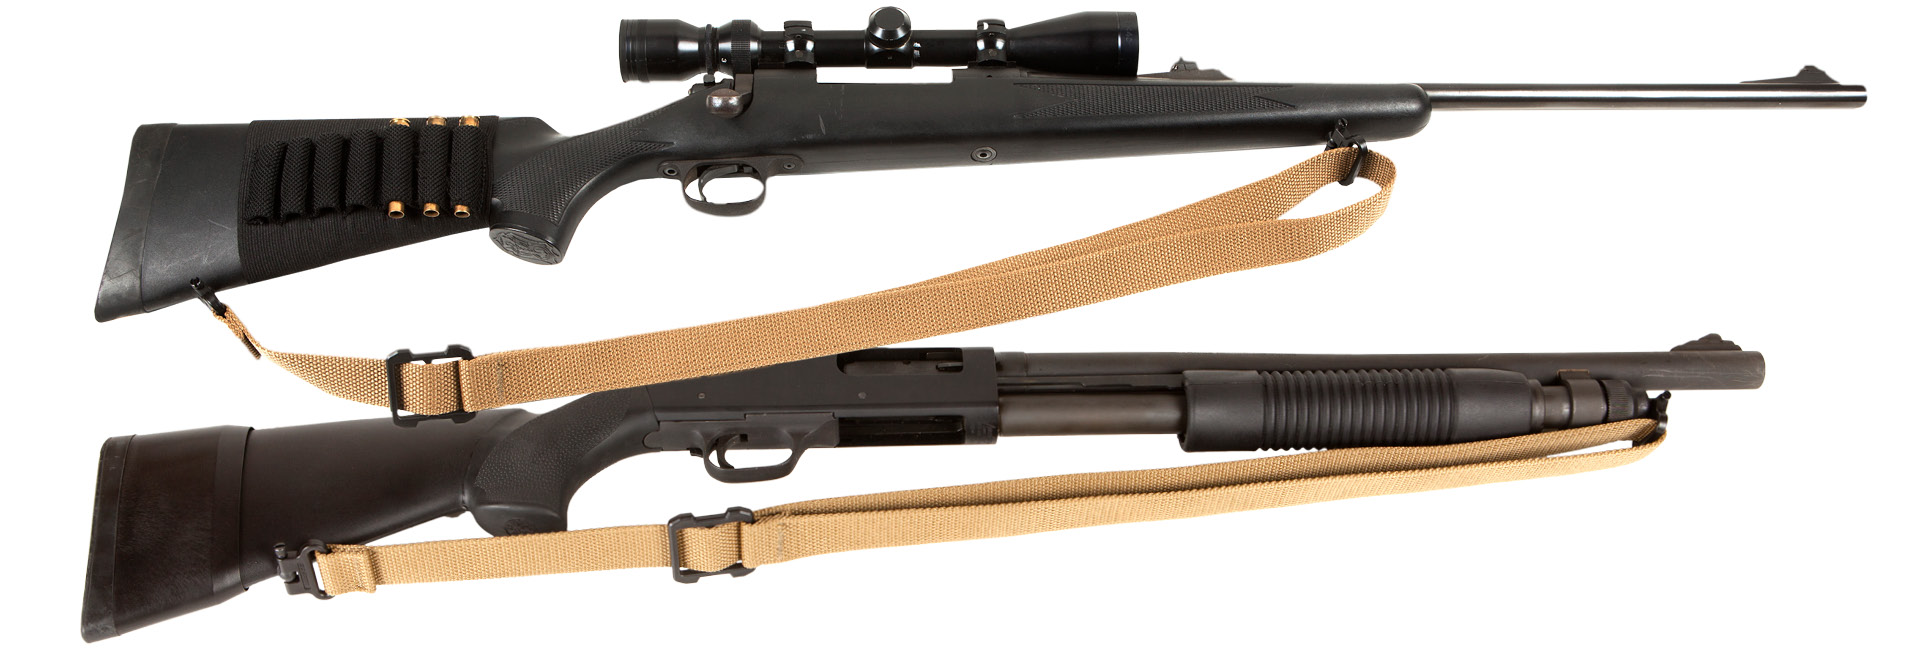 Hunting Rifle Sling and Hunting Shotgun Sling